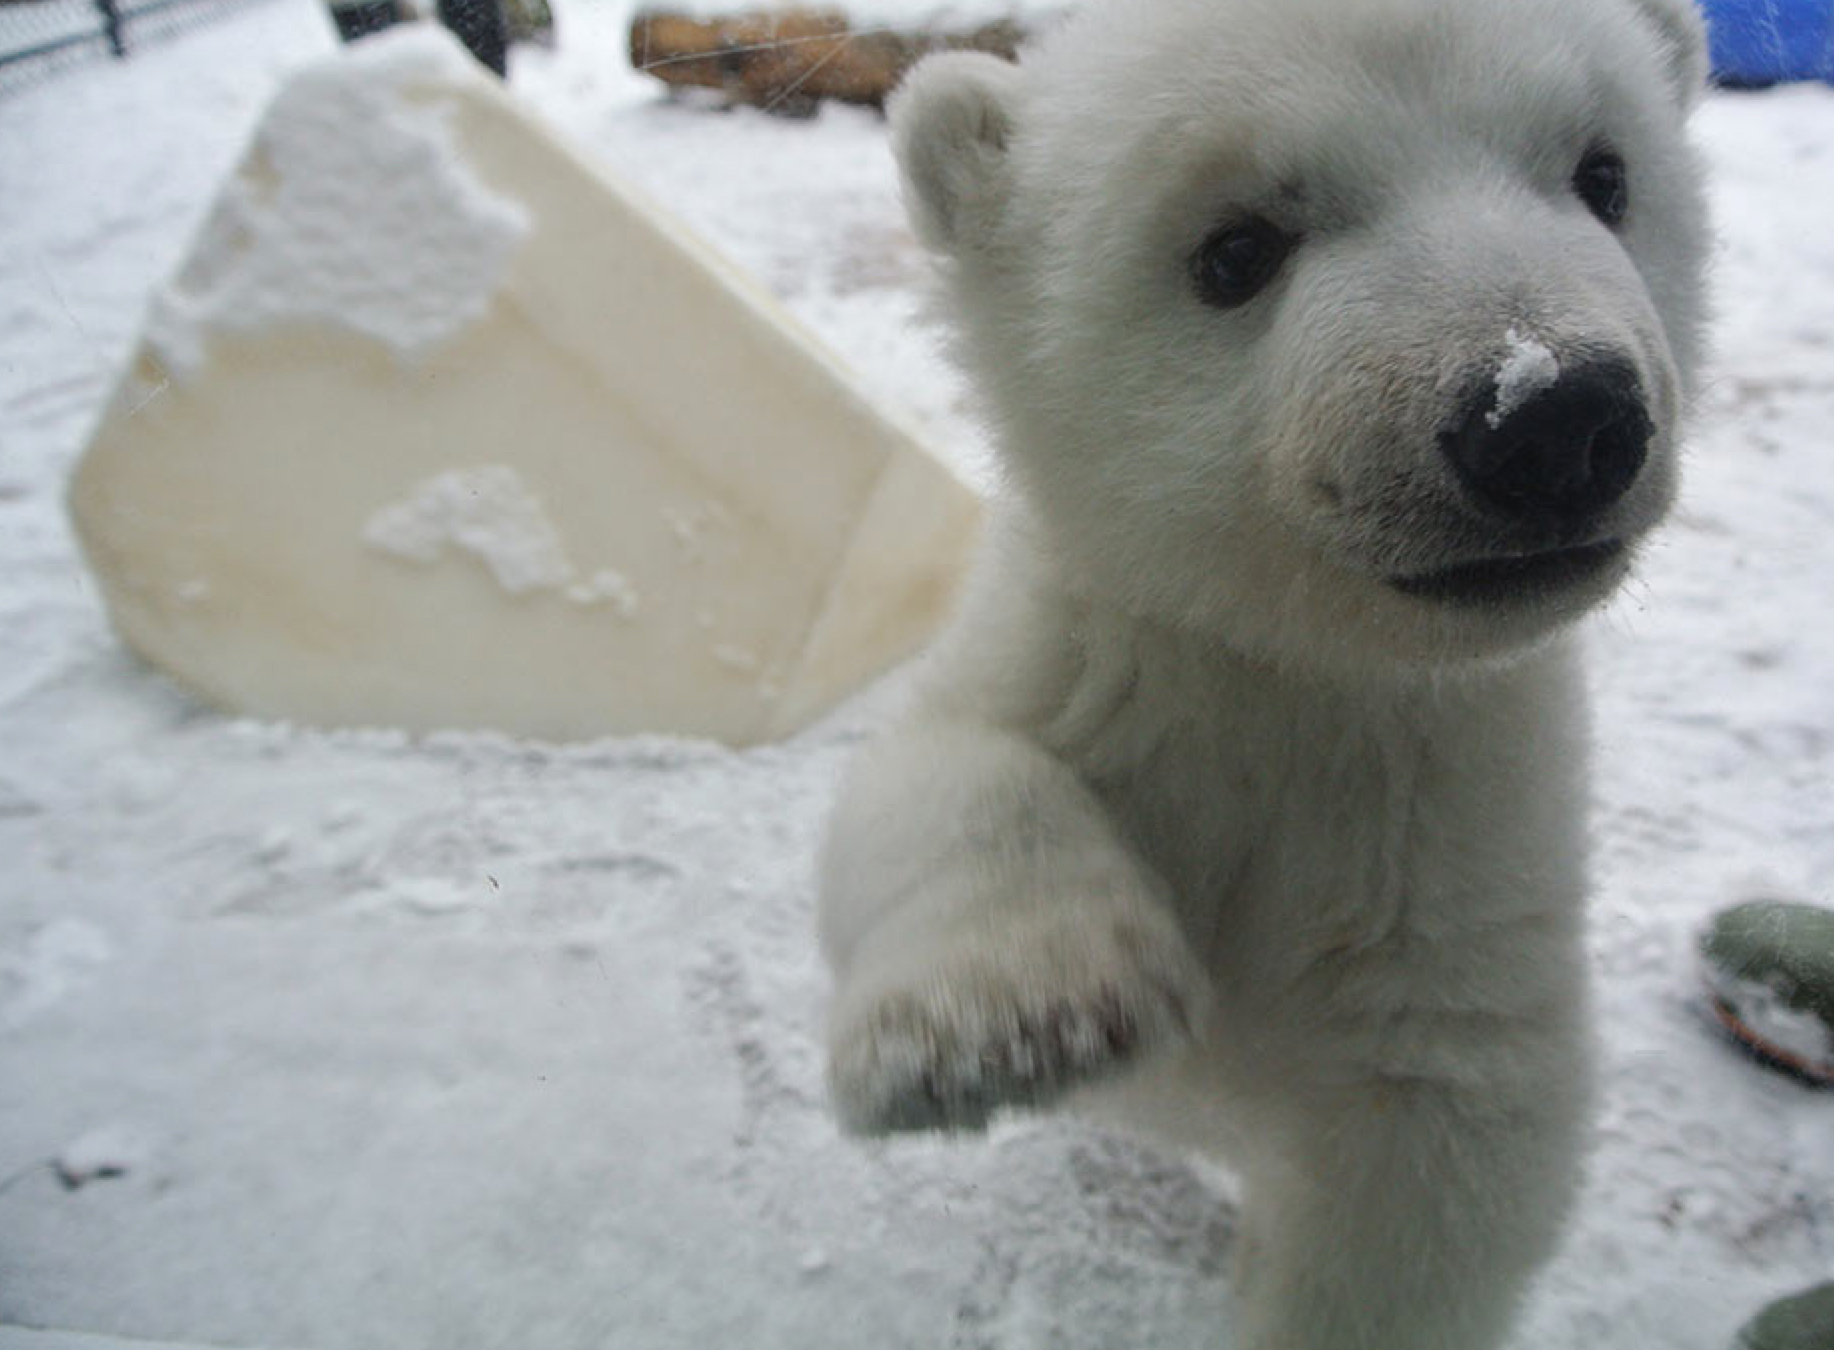 Watch a polar bear cub's first time playing in snow - CNN Video